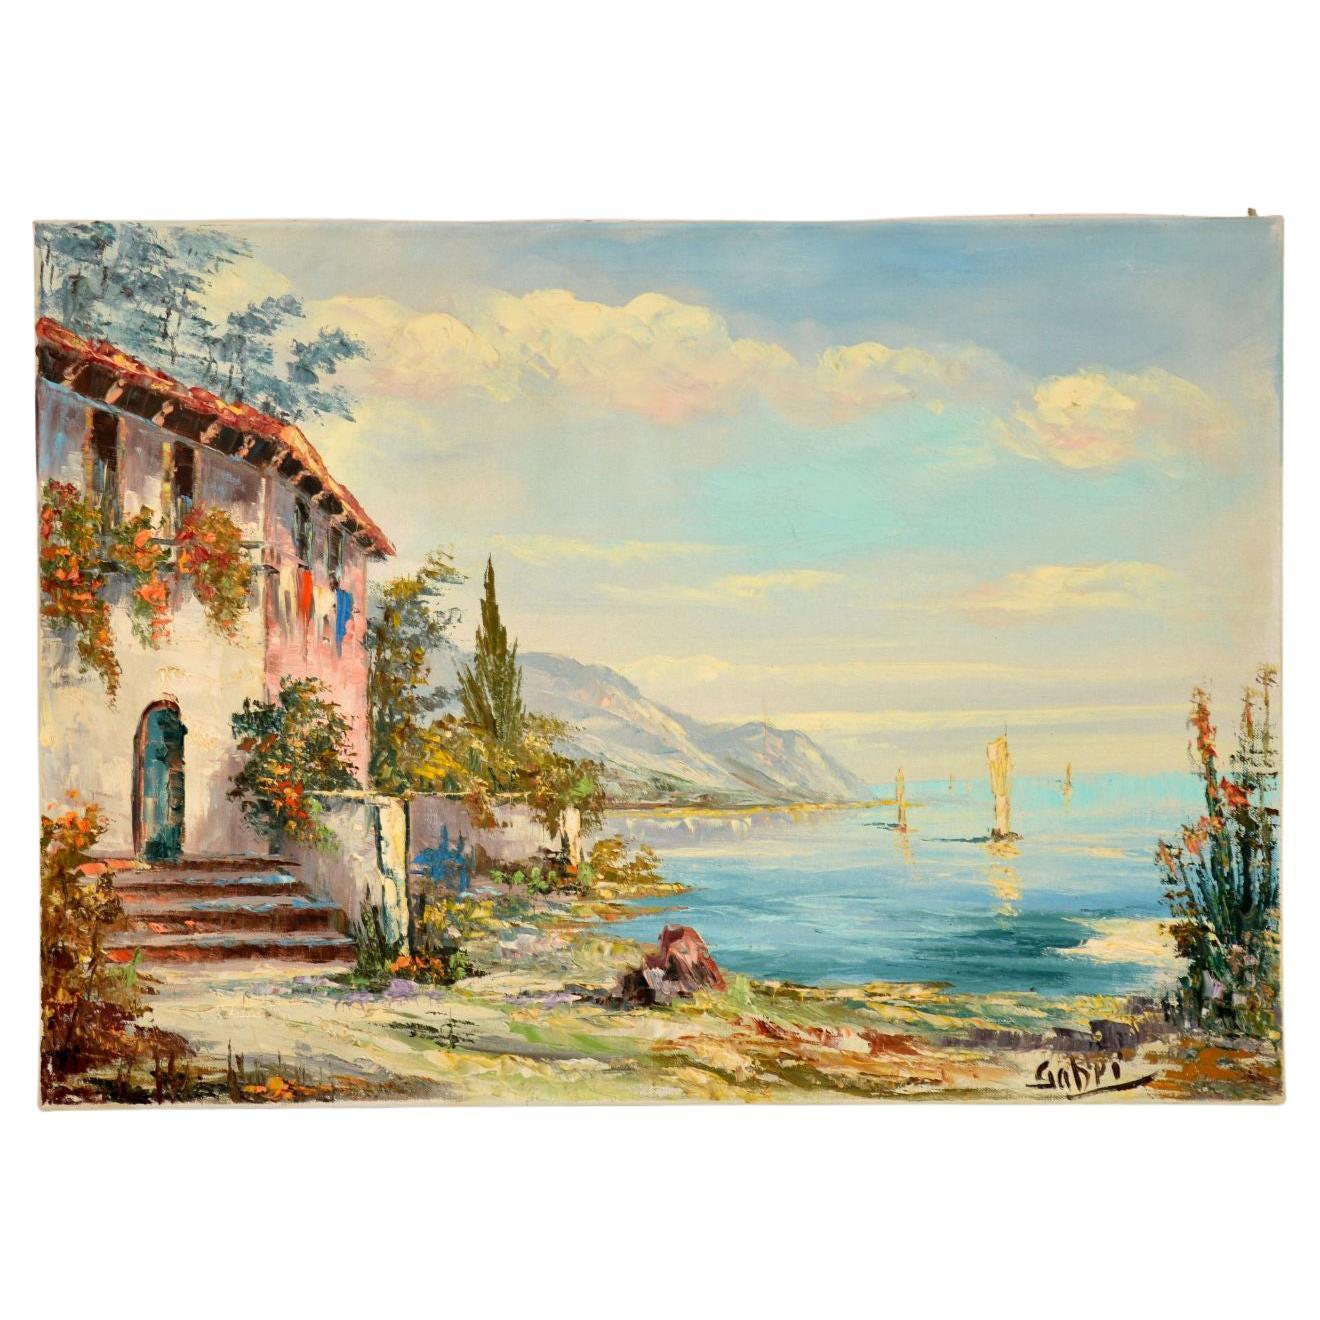 Vintage Landscape Impressionist Oil Painting by "Gabri" For Sale